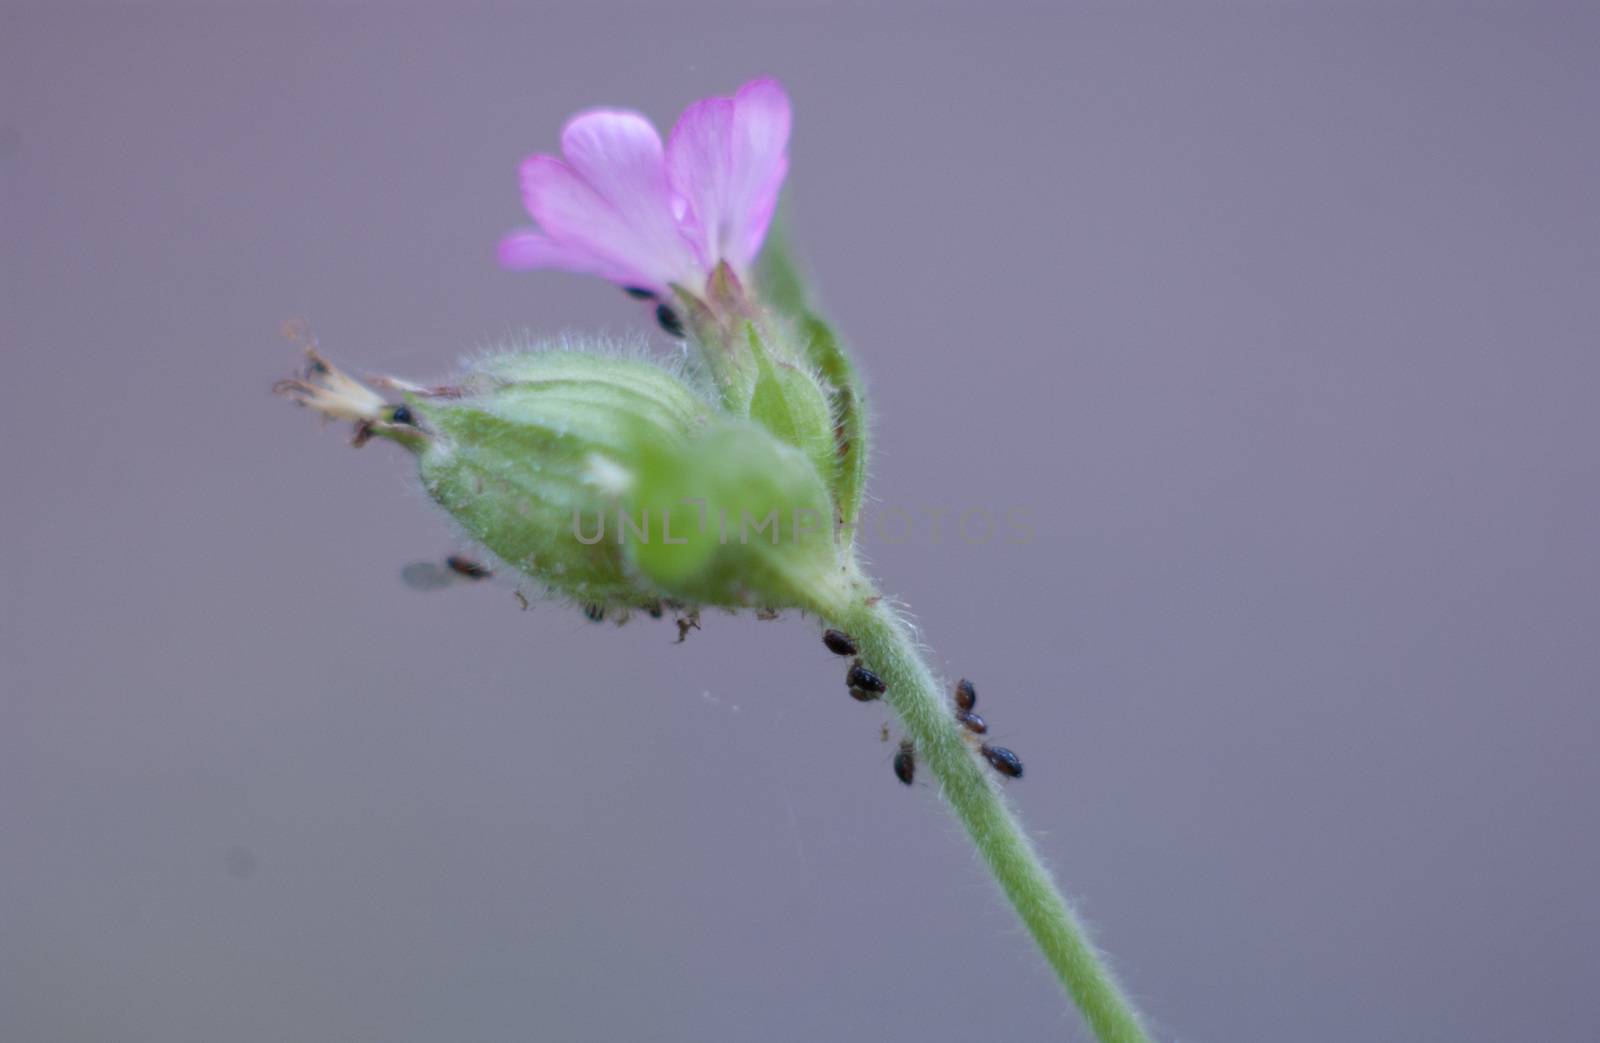 Ants on flower by medsofoto